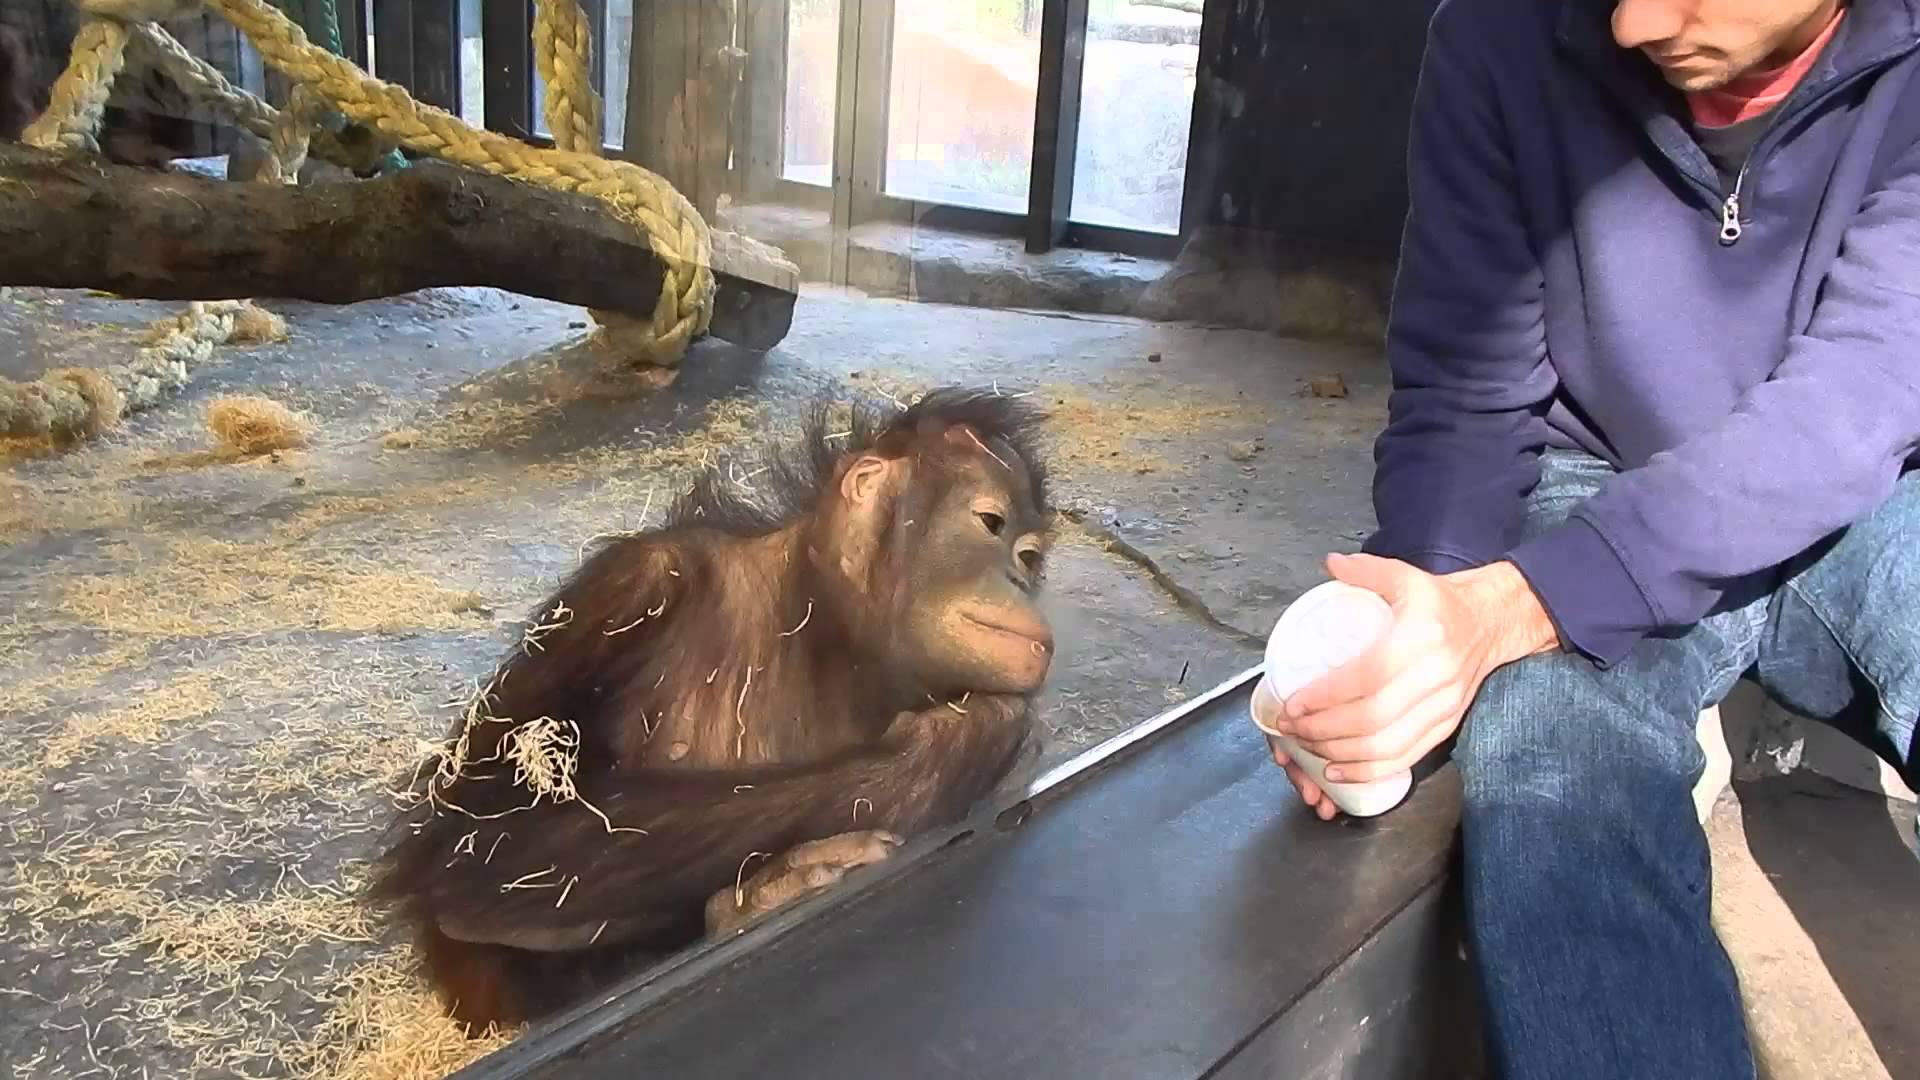 Jaká je reakce orangutana na magický trik?